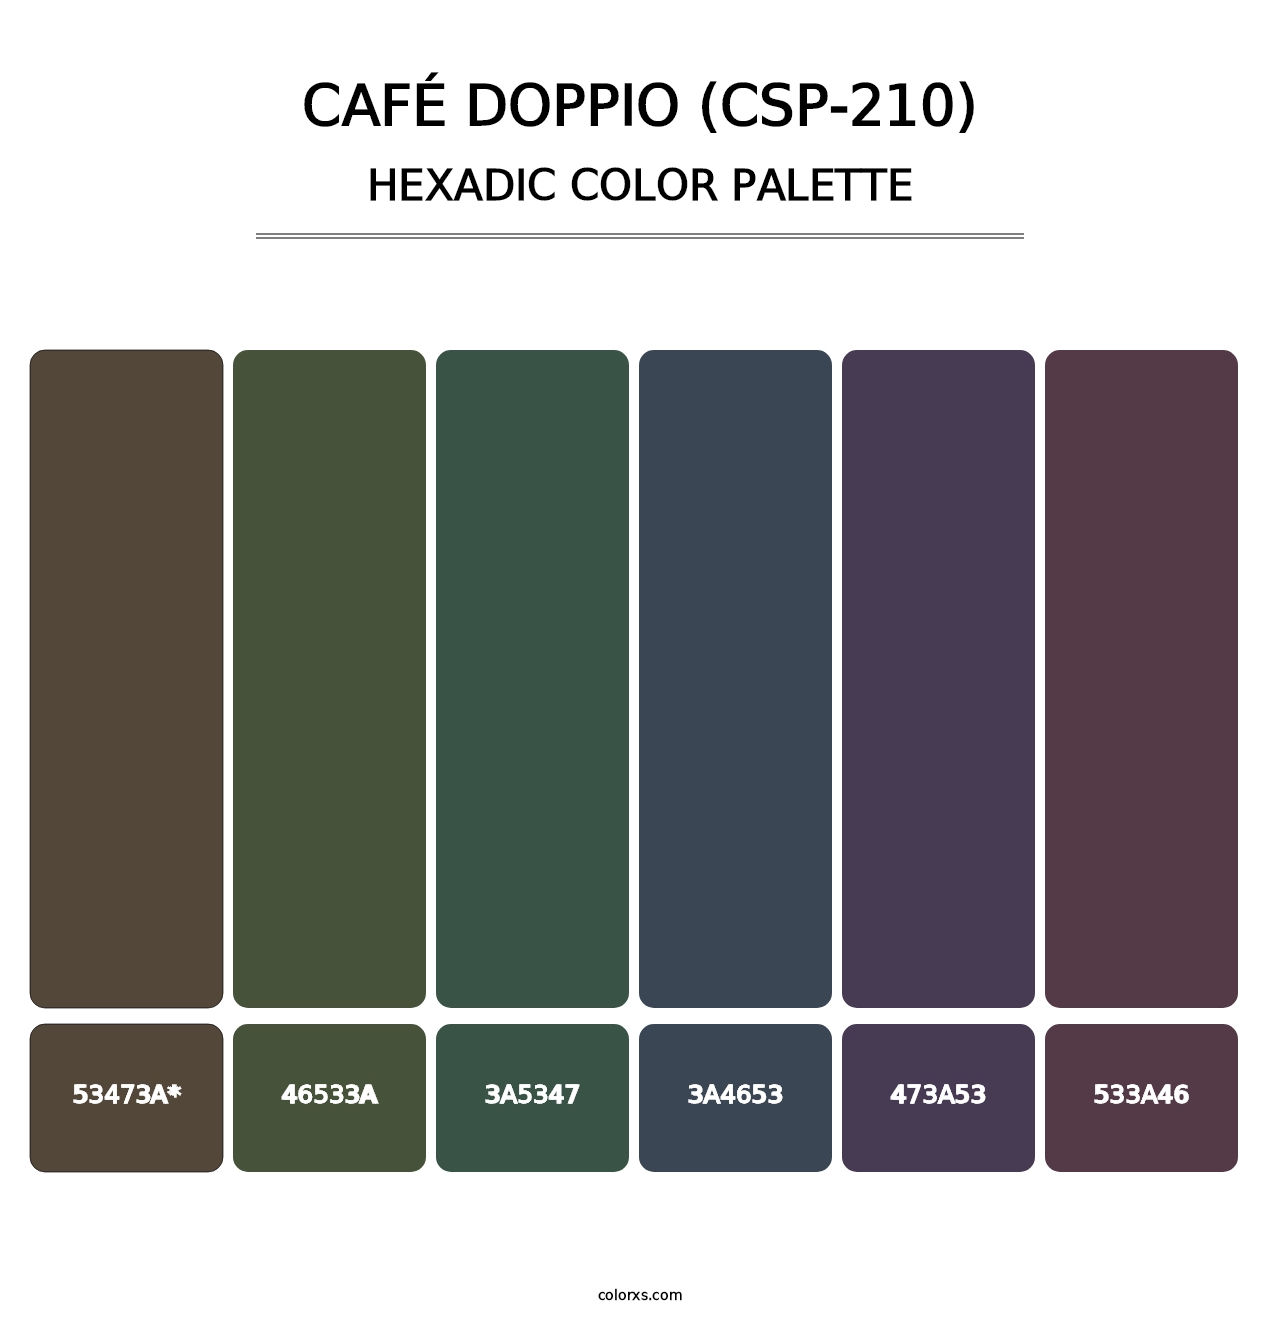 Café Doppio (CSP-210) - Hexadic Color Palette